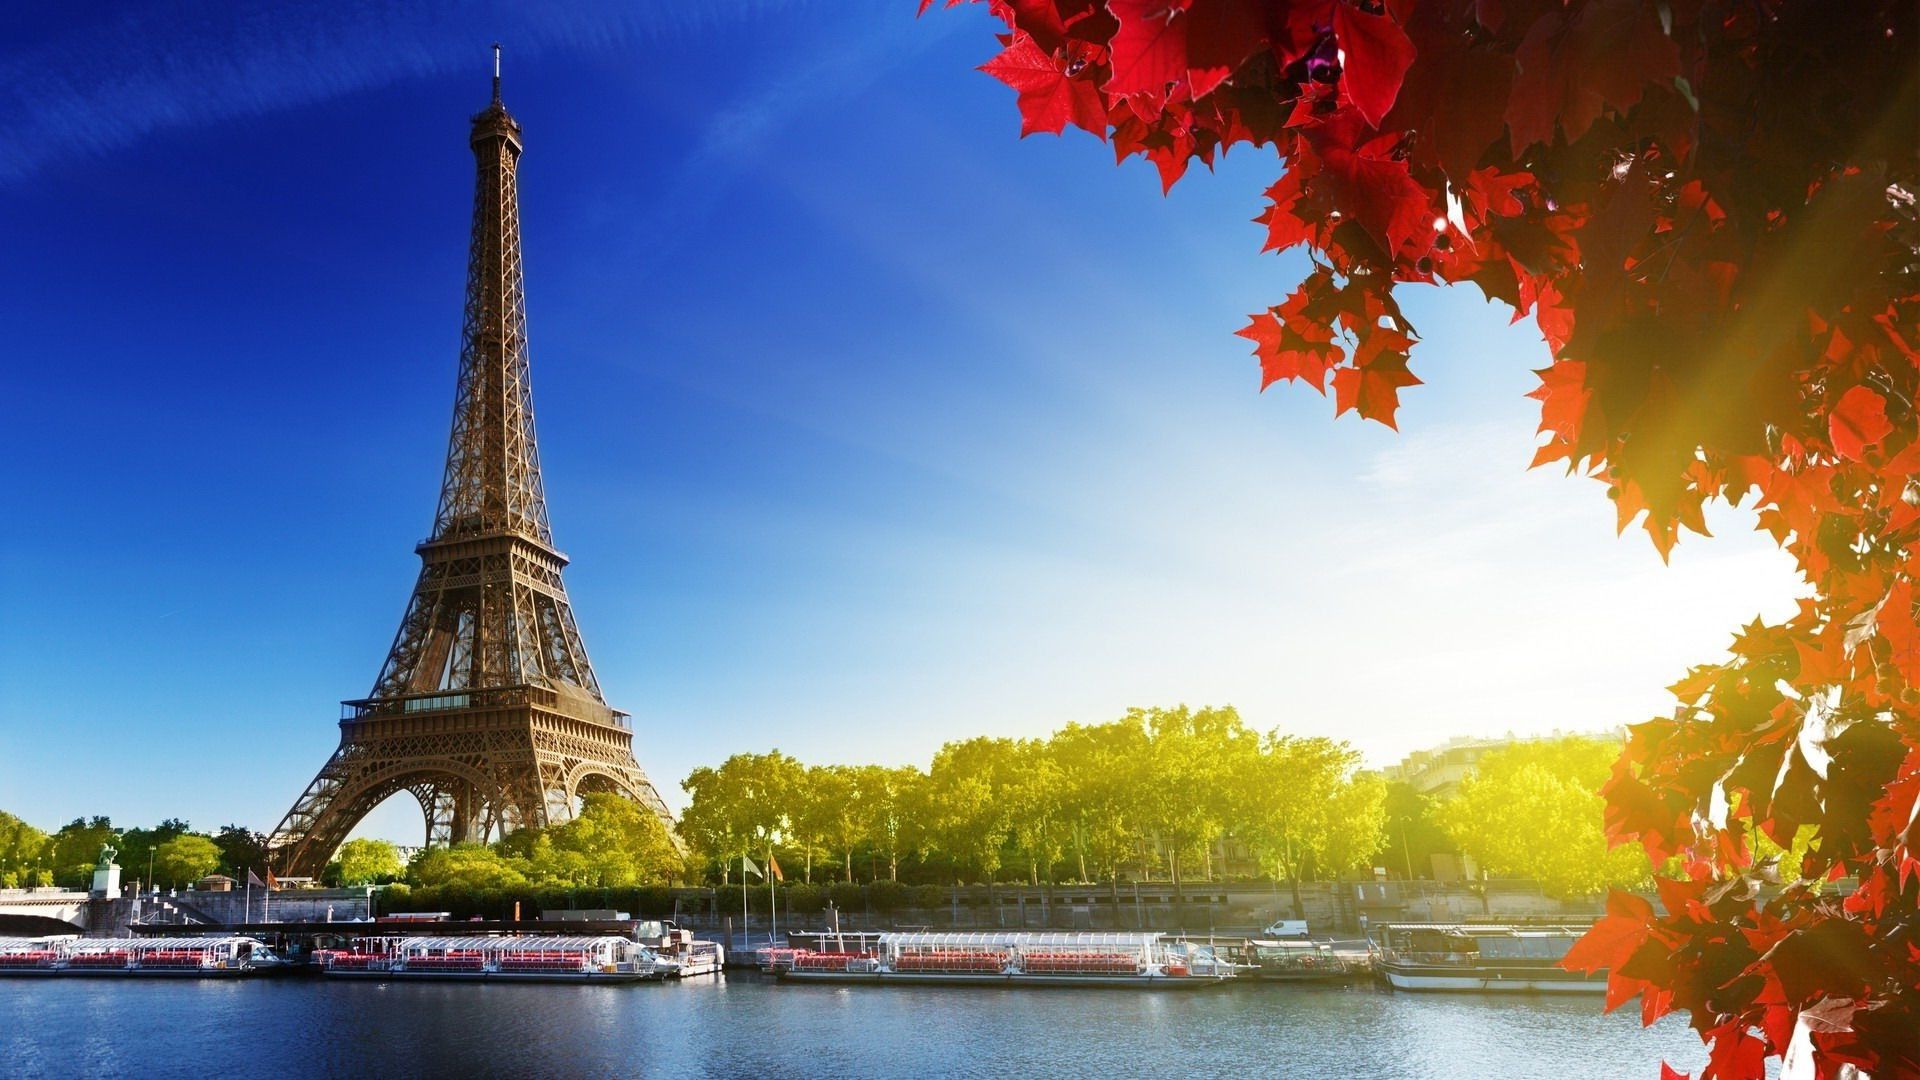 France Eiffel Tower - wallpaper.